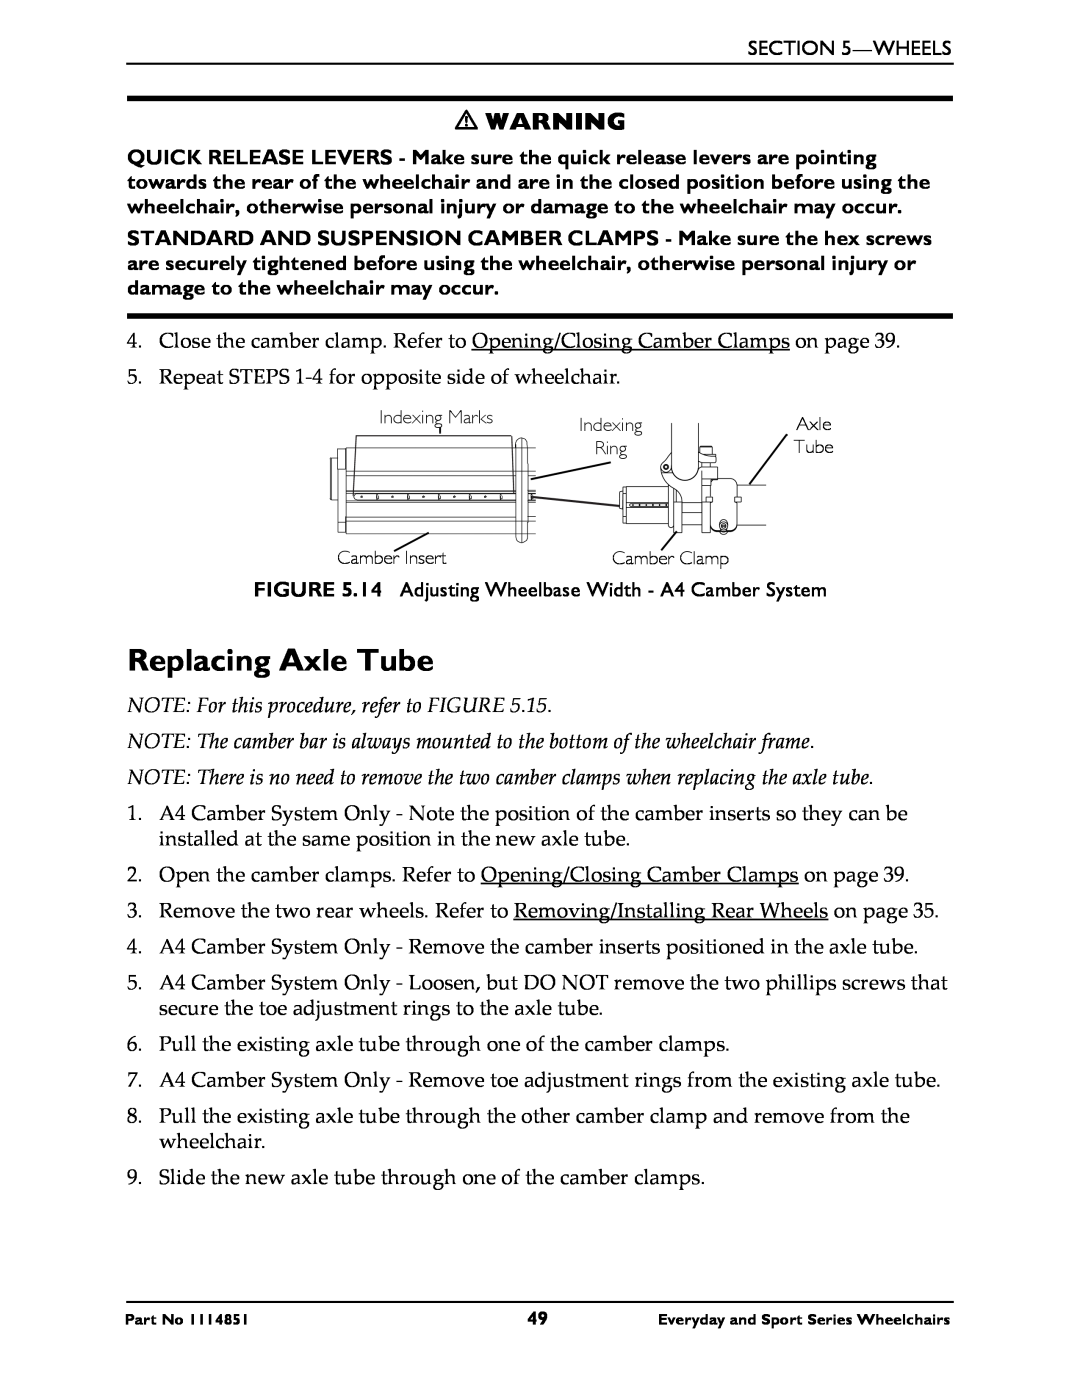 Invacare X-Terminator QR, X-Terminator Titanium Replacing Axle Tube, NOTE For this procedure, refer to FIGURE, Indexing 